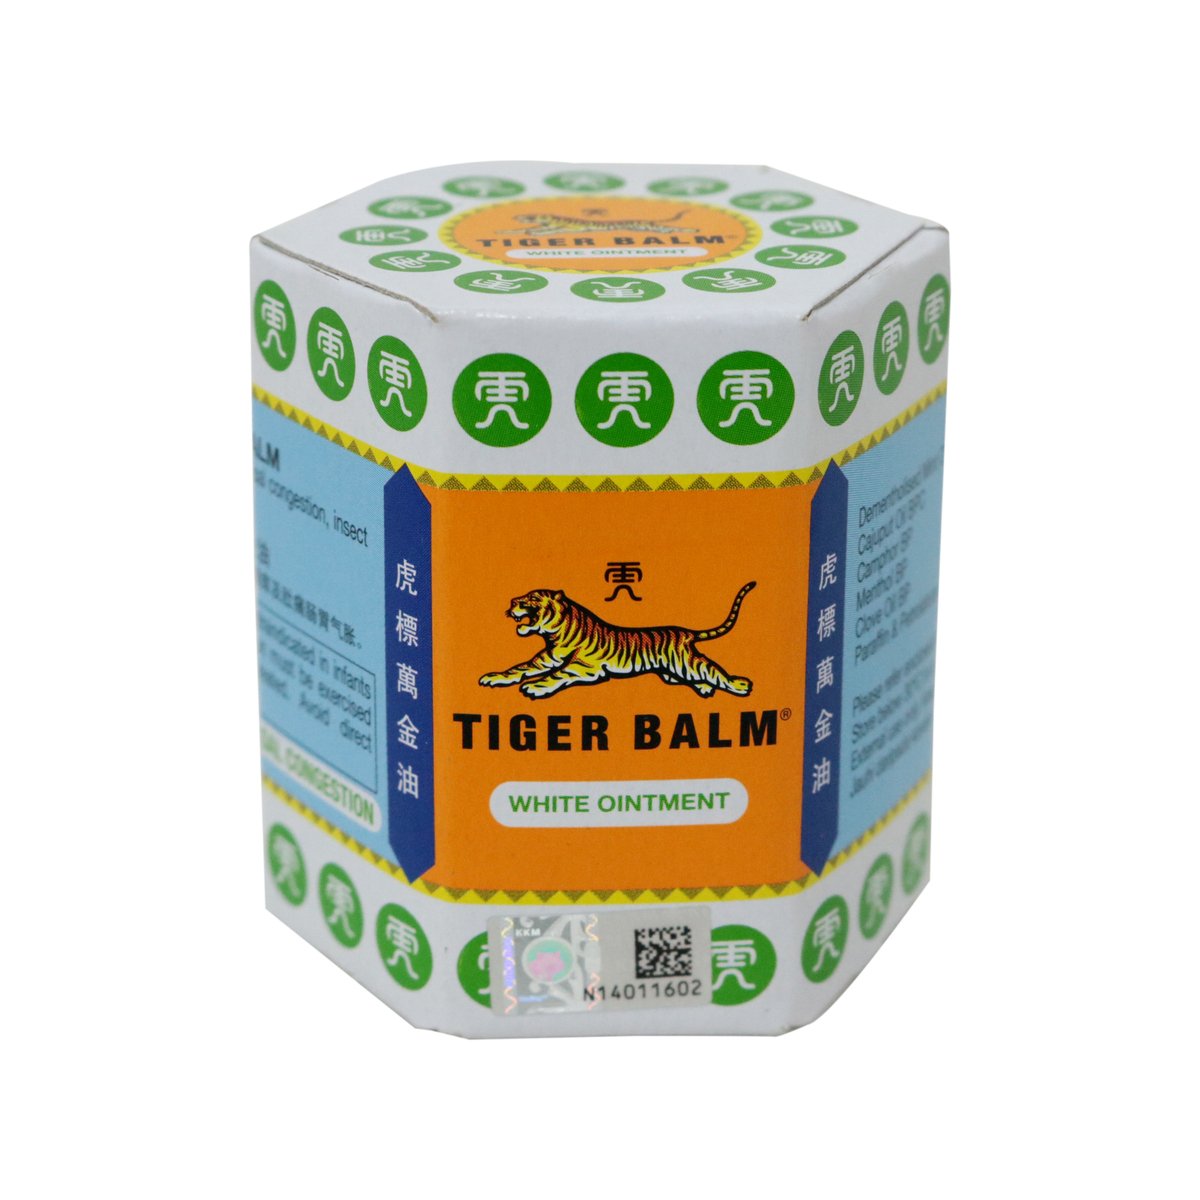 Tiger Balm White Ointment 30g